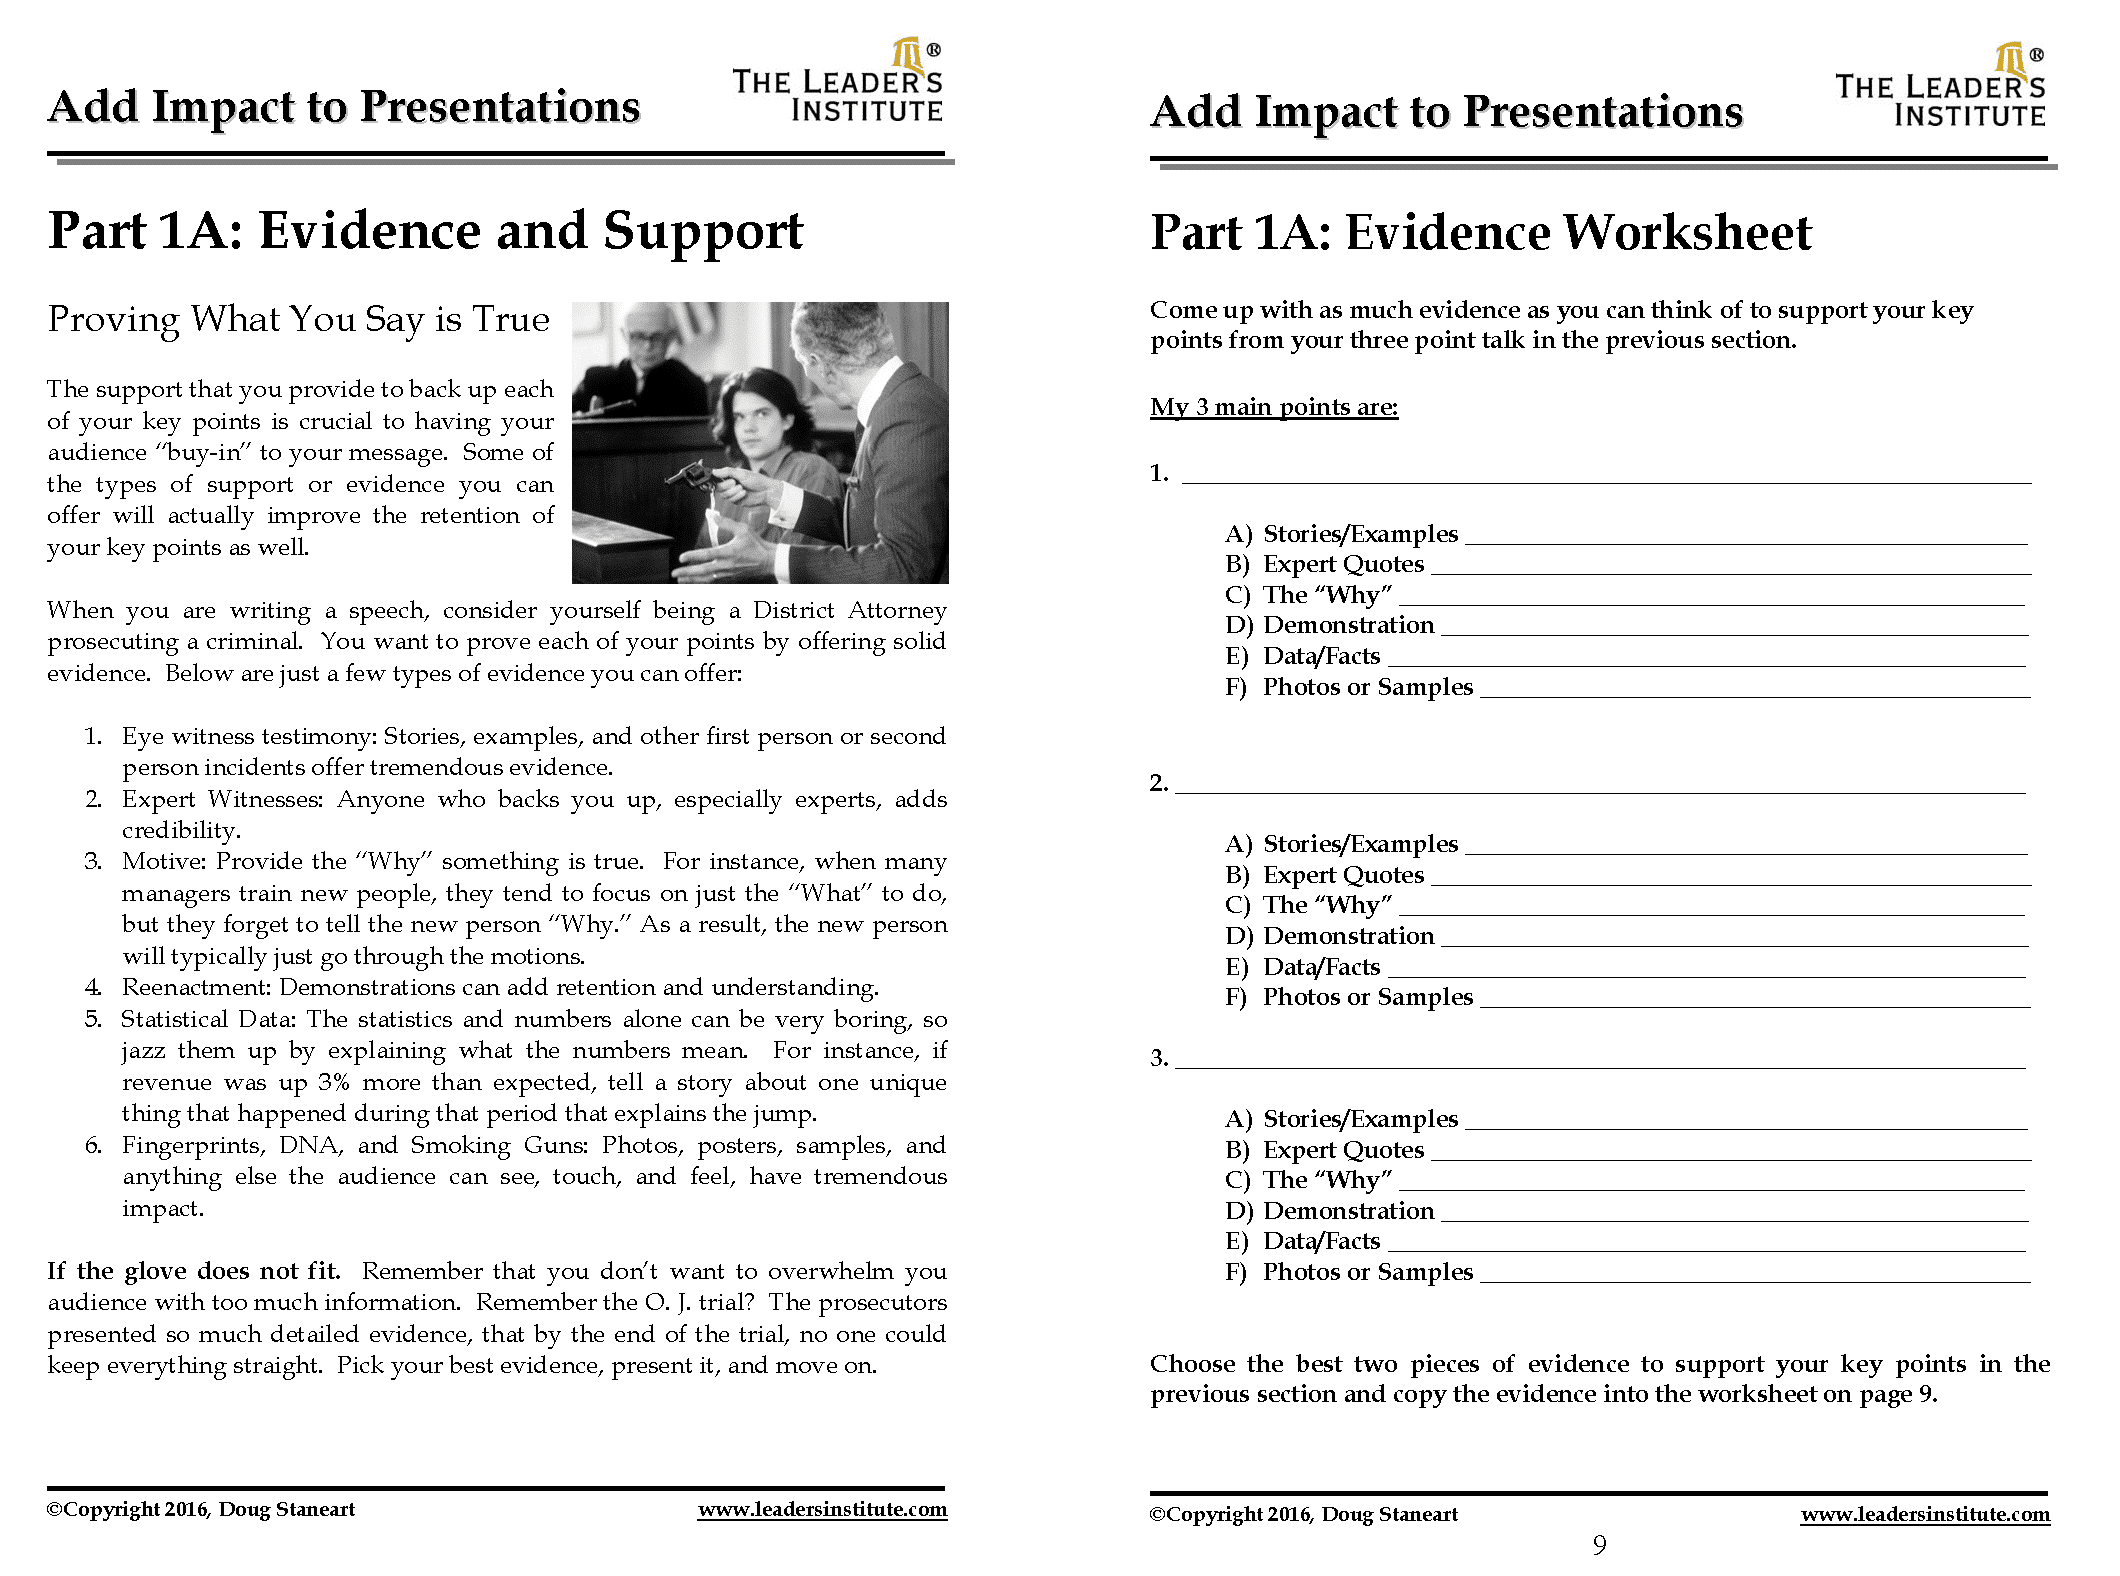 handout for presentation